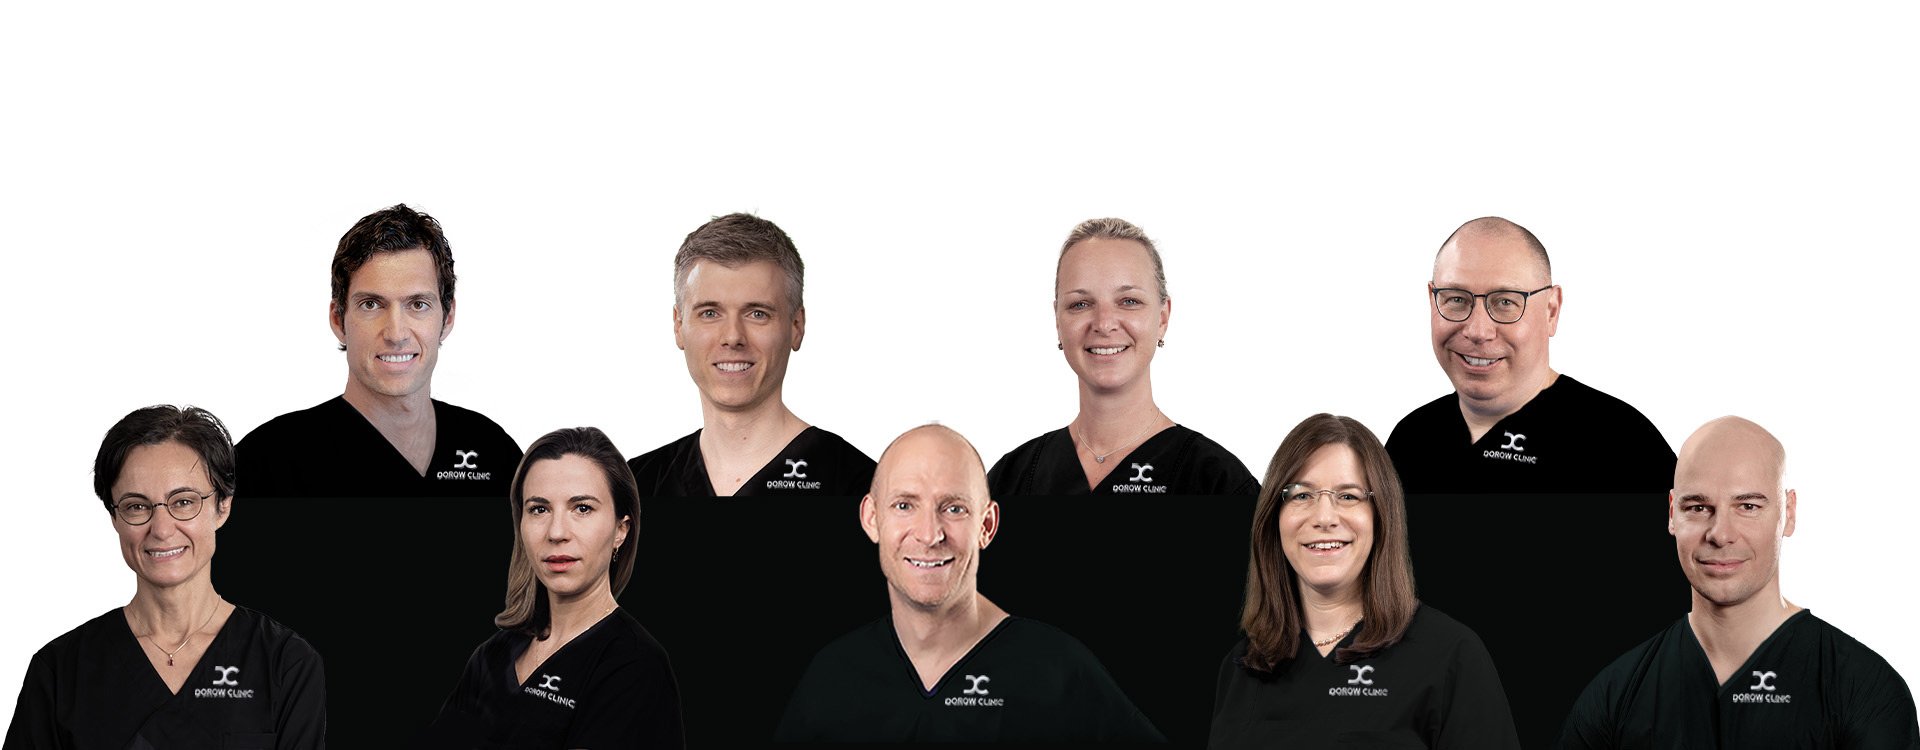 Ästhetik Team der Dorow Clinic 